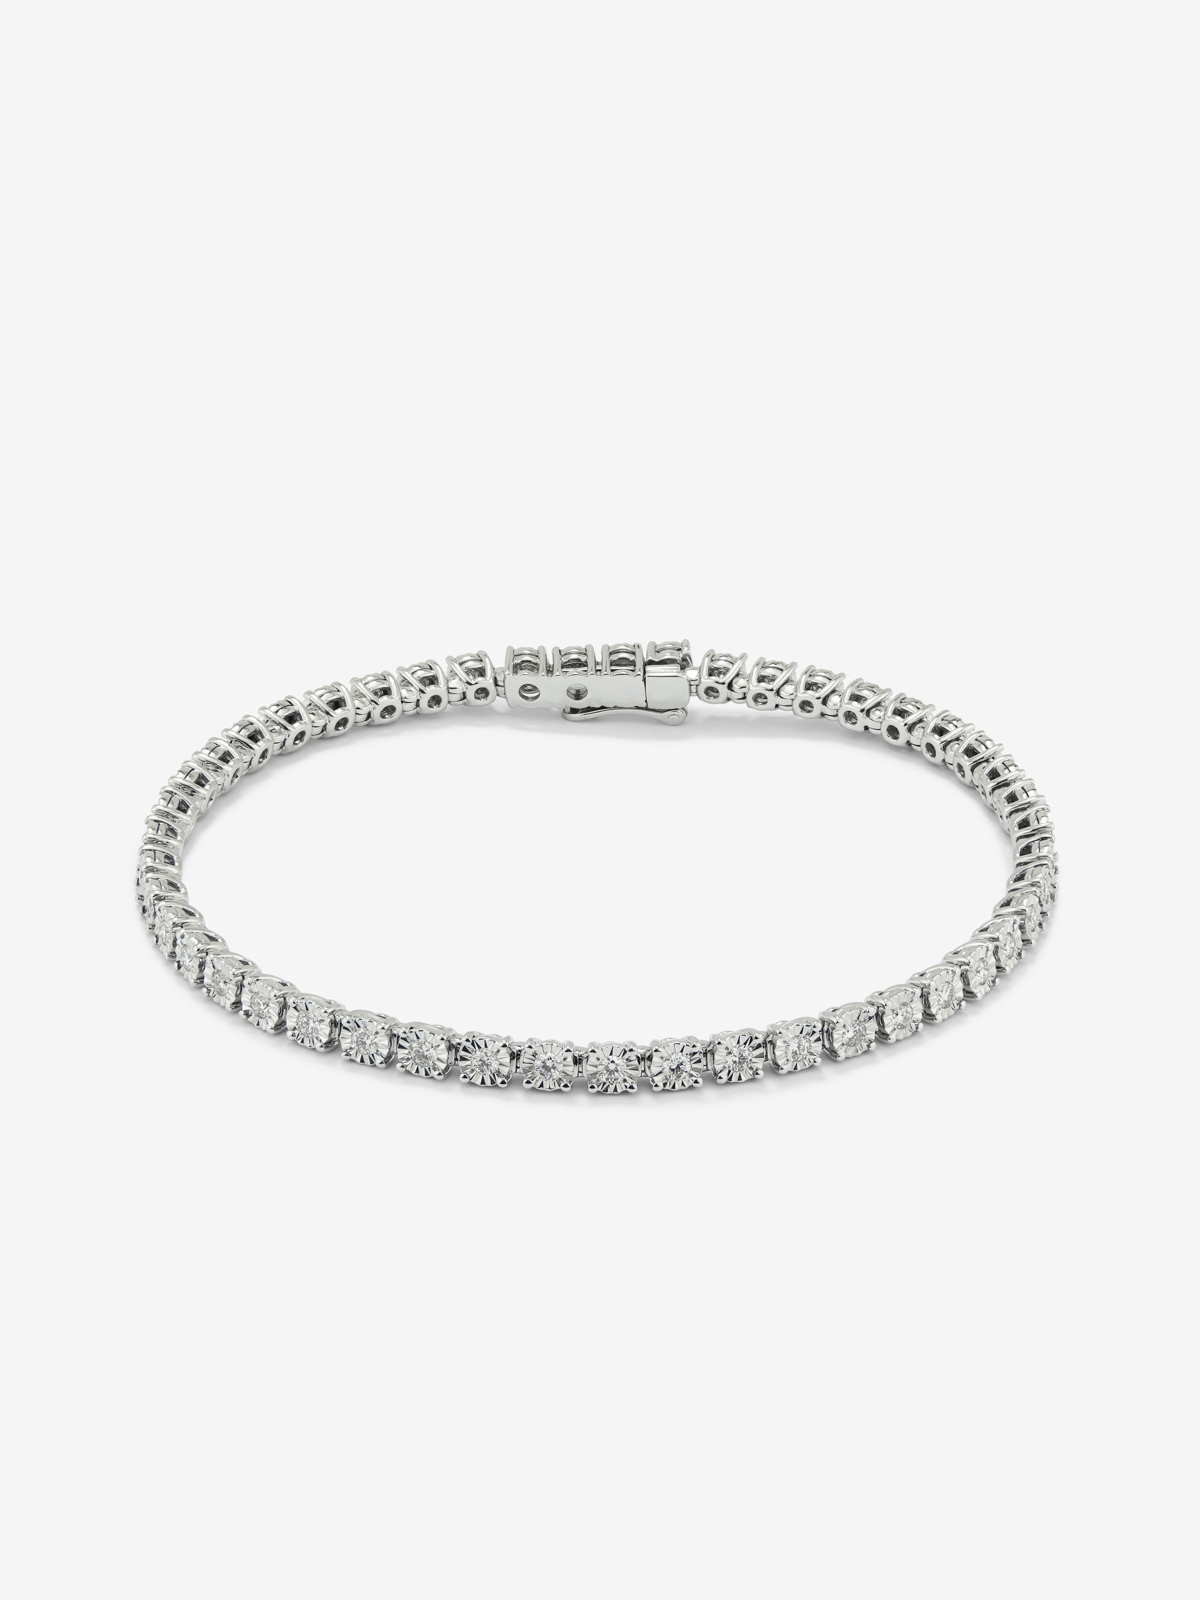 18K White Gold Rivière bracelet with 0.89 cts bright size diamonds